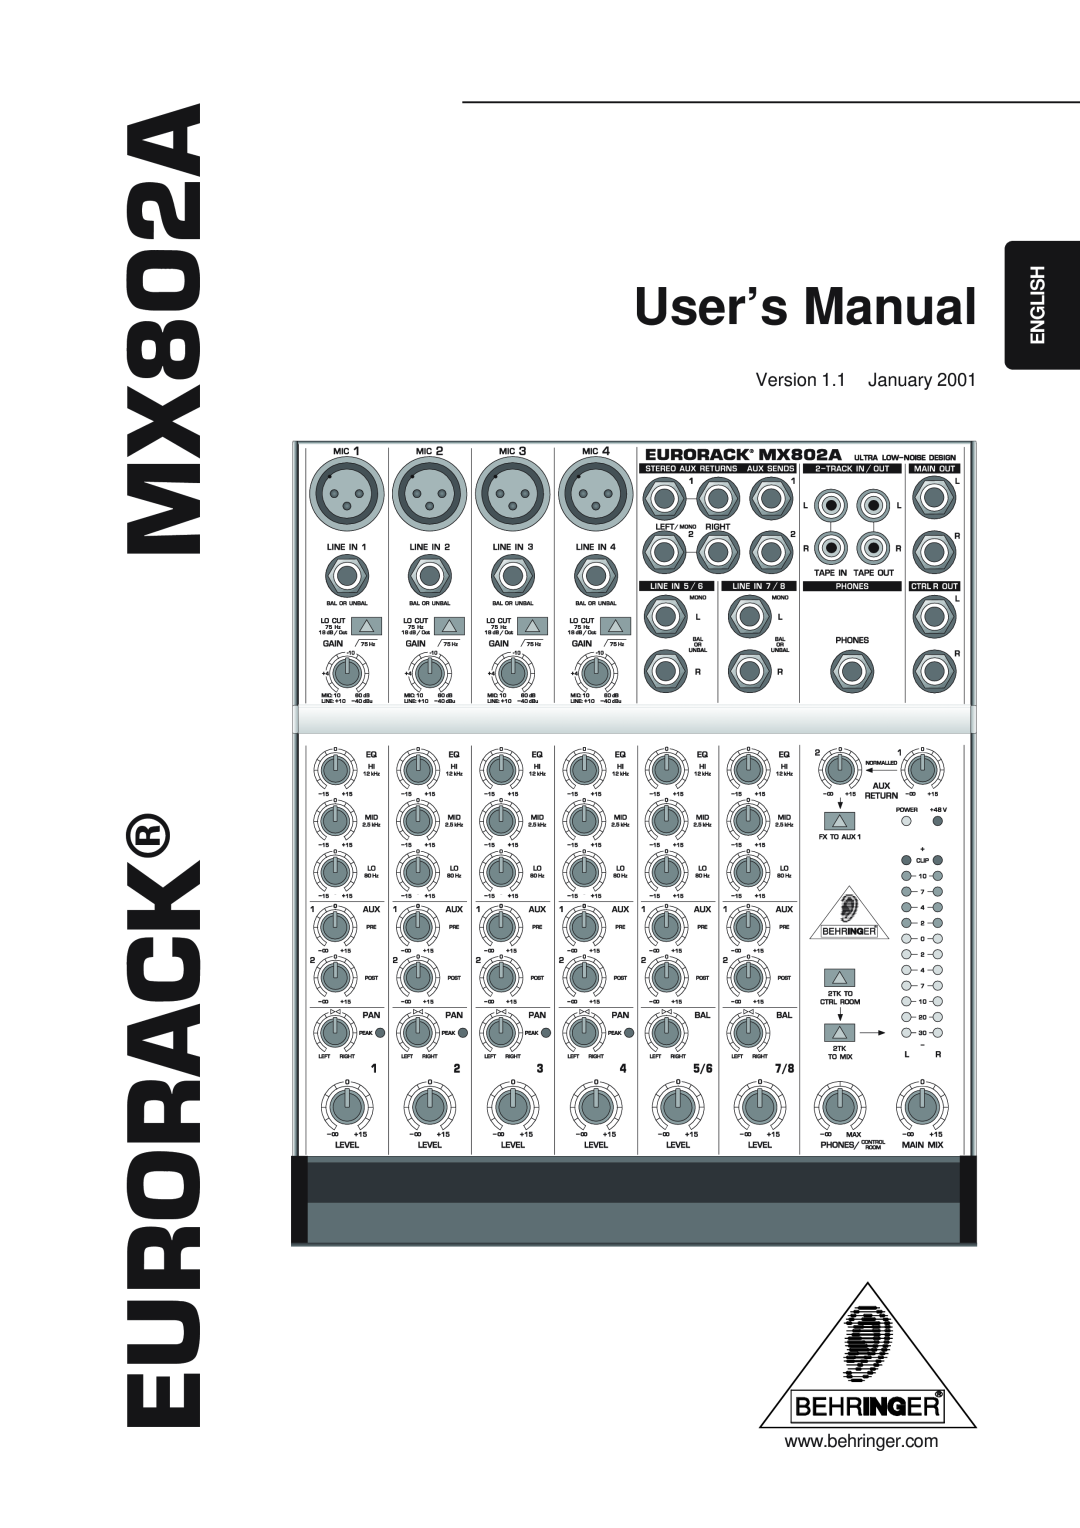 Behringer user manual EURORACK MX802A, User’s Manual, English 